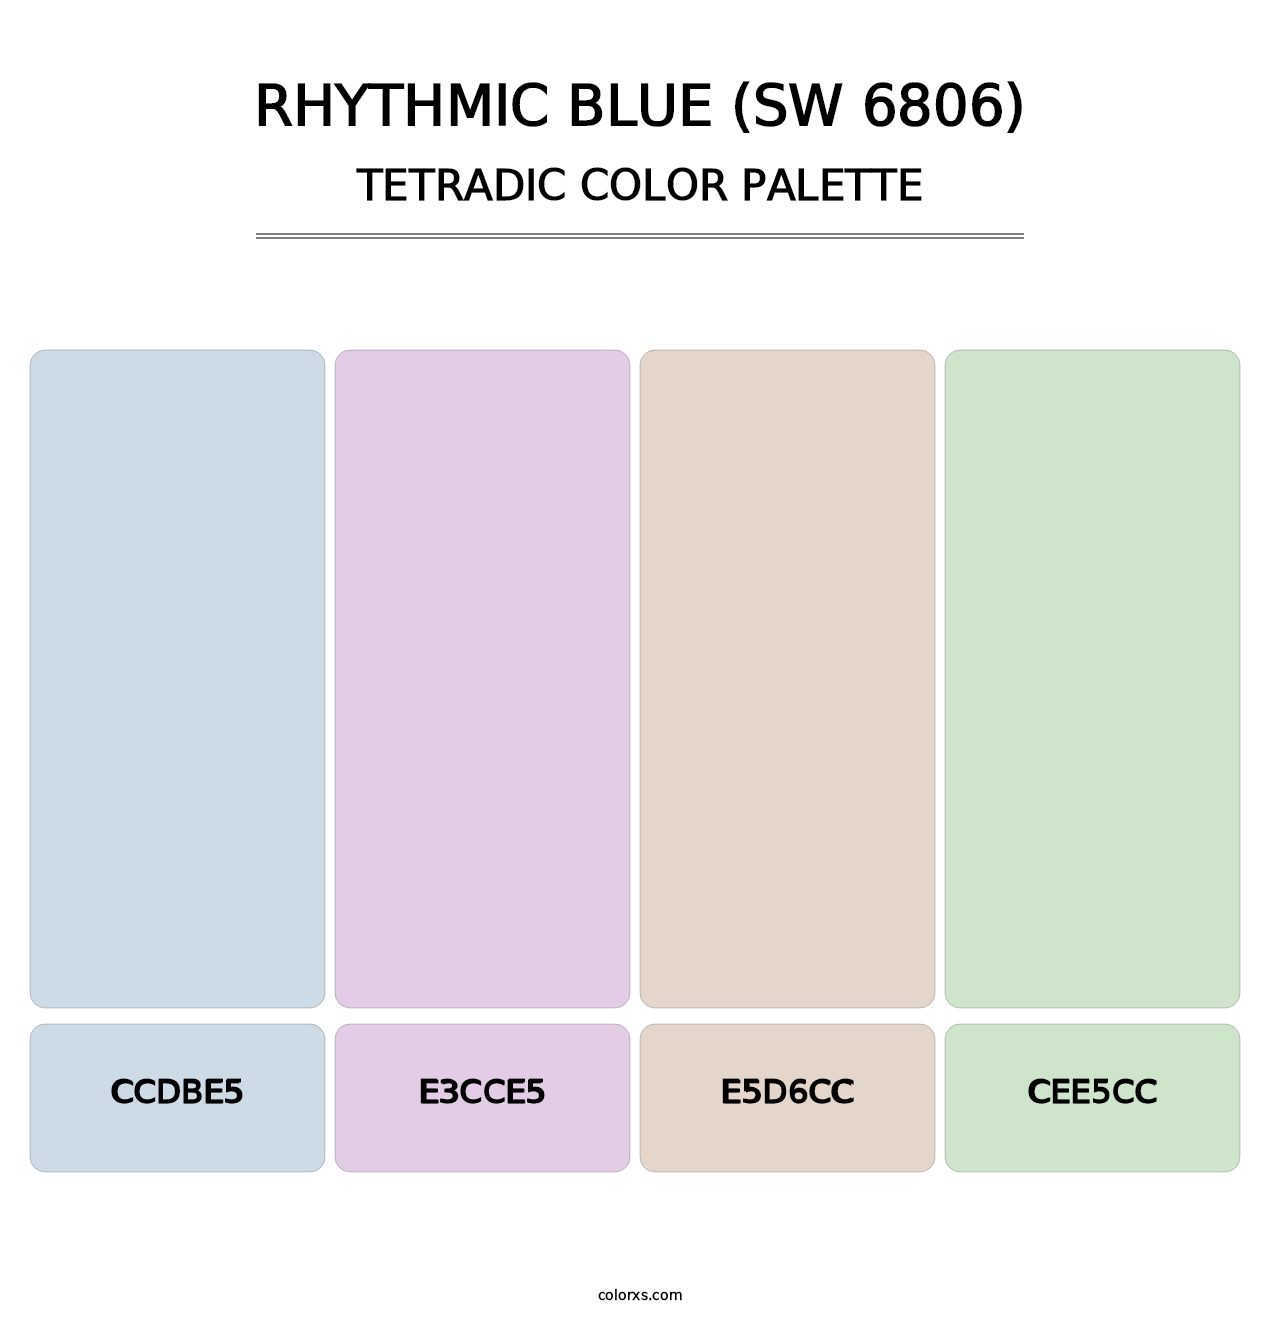 Rhythmic Blue (SW 6806) - Tetradic Color Palette